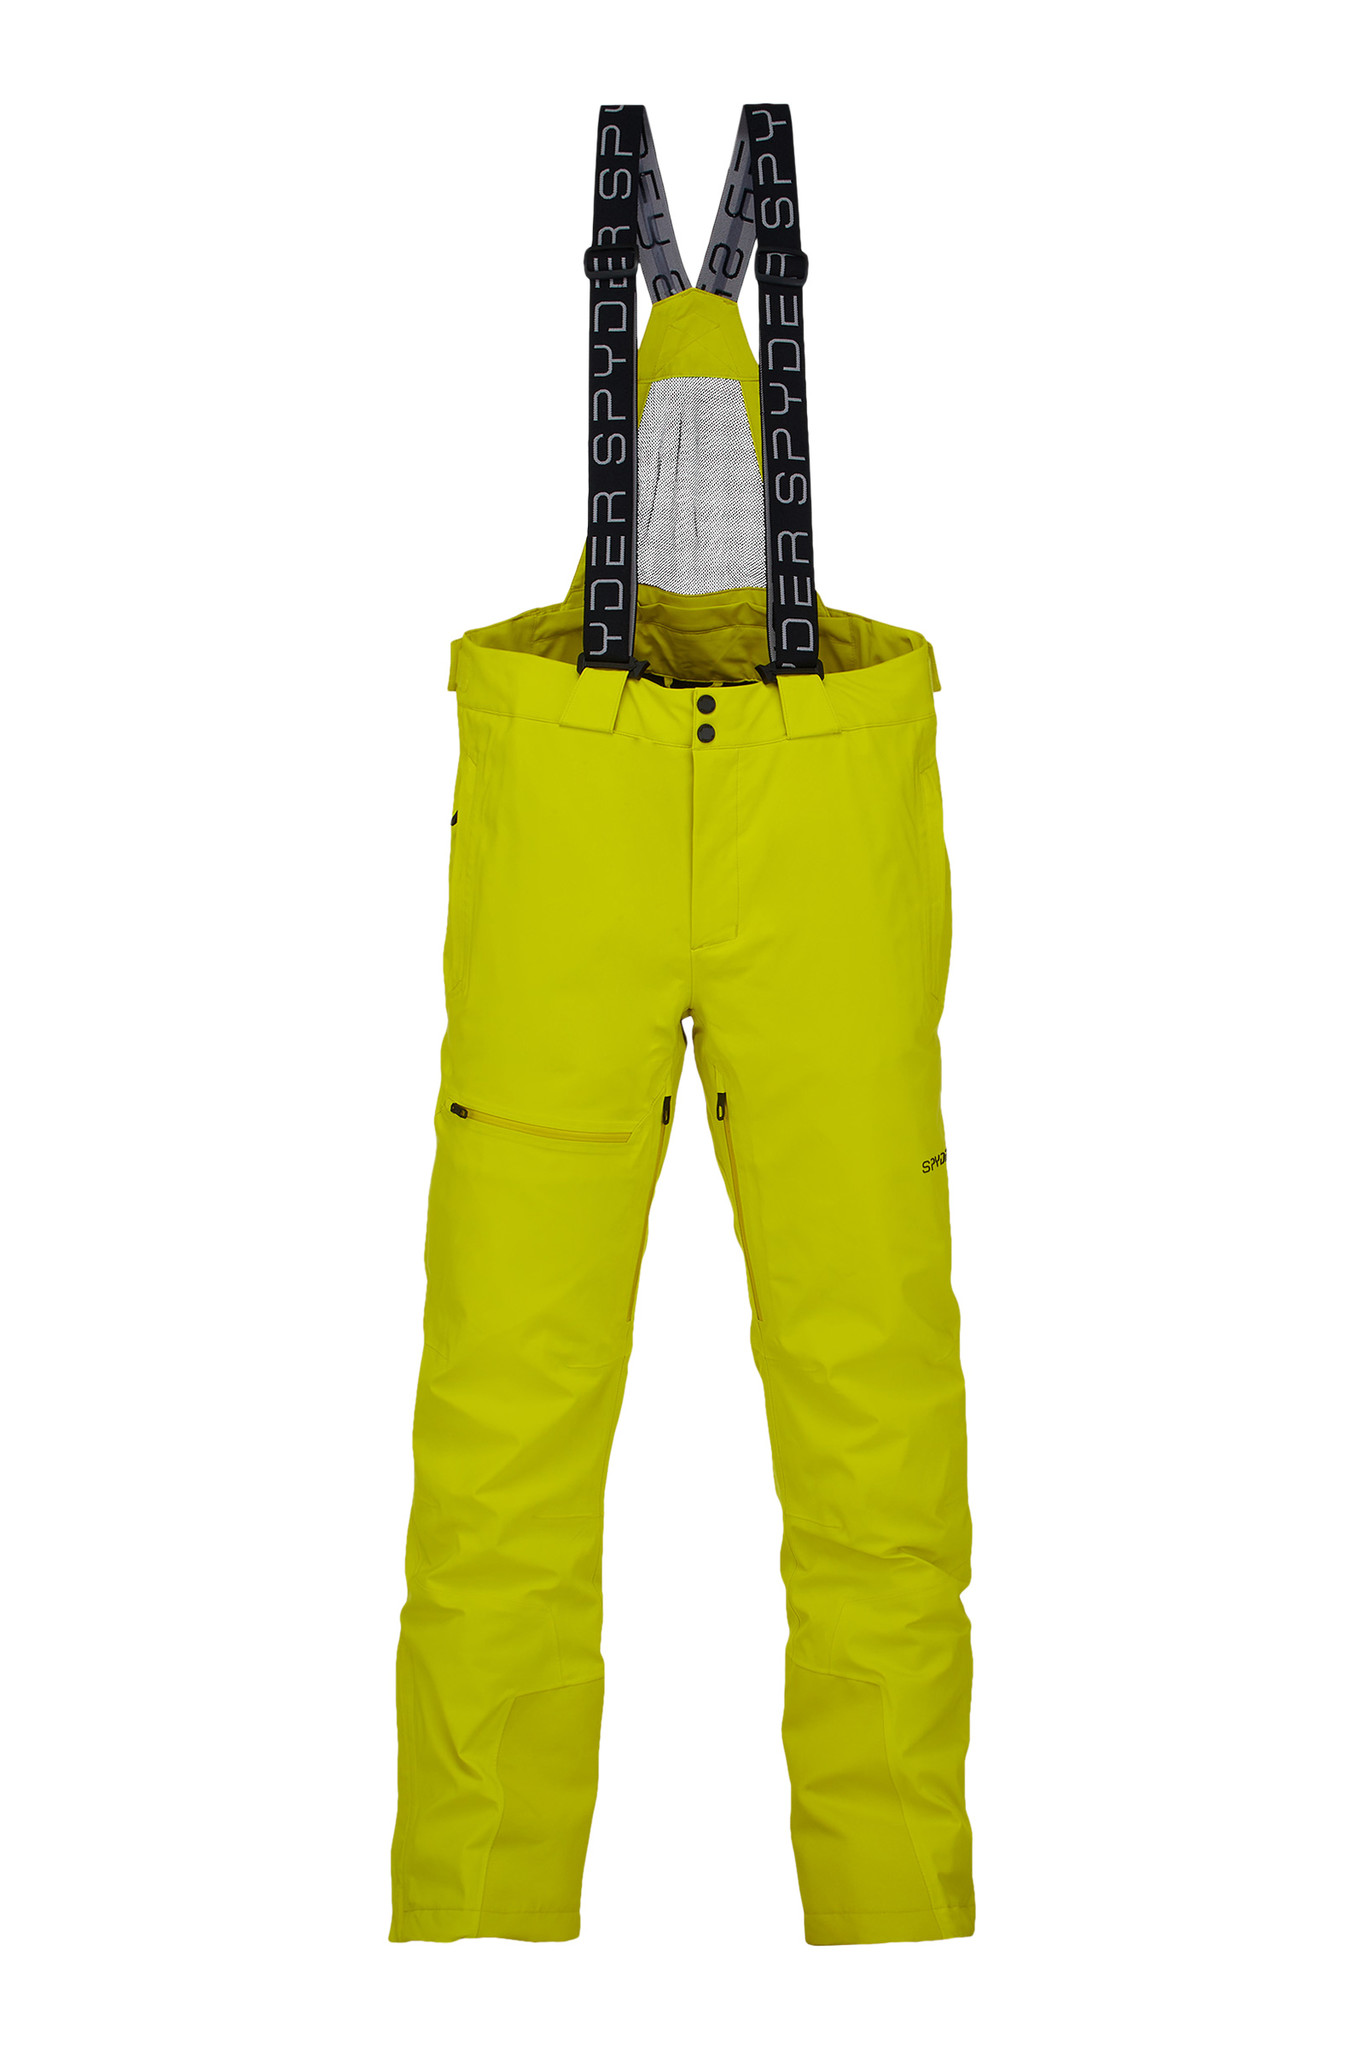 Spyder Men's Dare GTX Pants – Citron - Free Style Sport